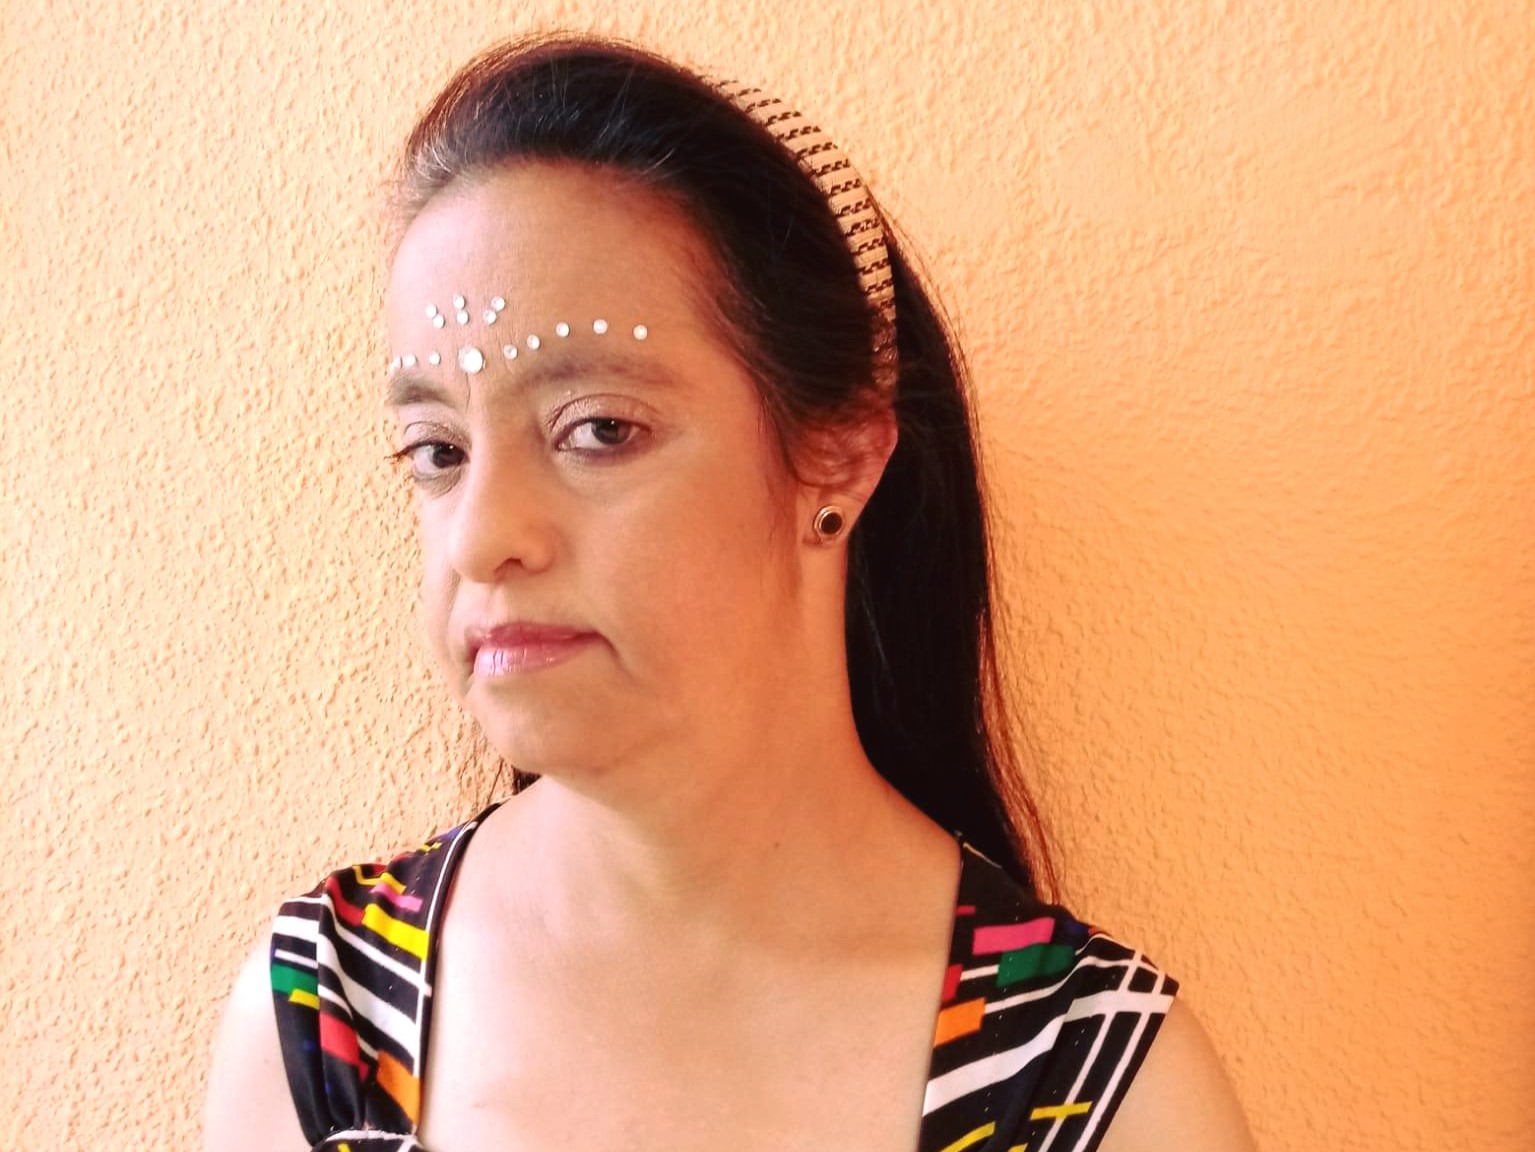 Mujer con síndrome de Down maquillada